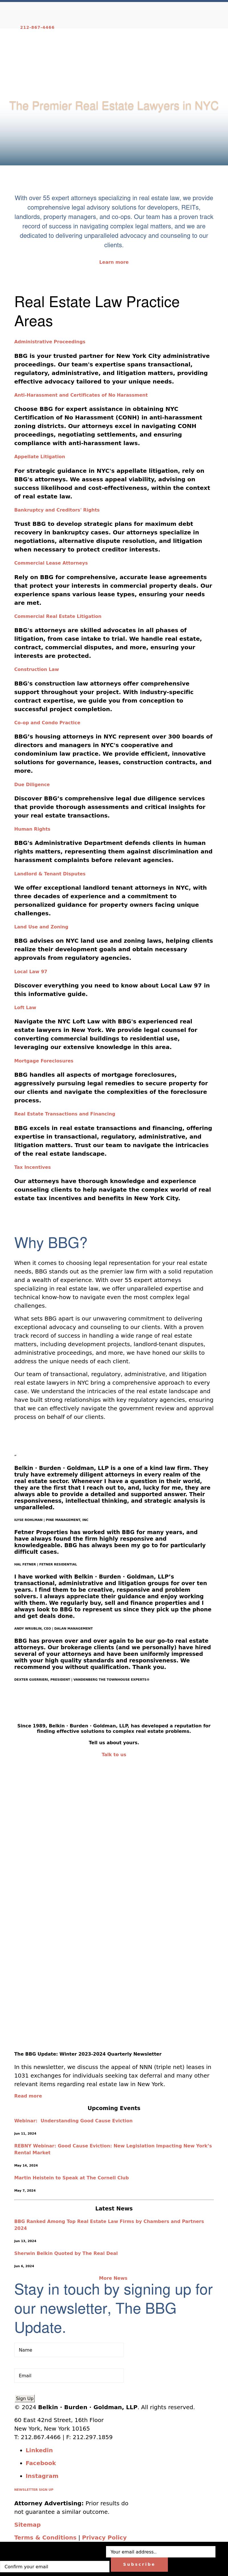 Belkin Burden Wenig & Goldman, LLP - New York NY Lawyers